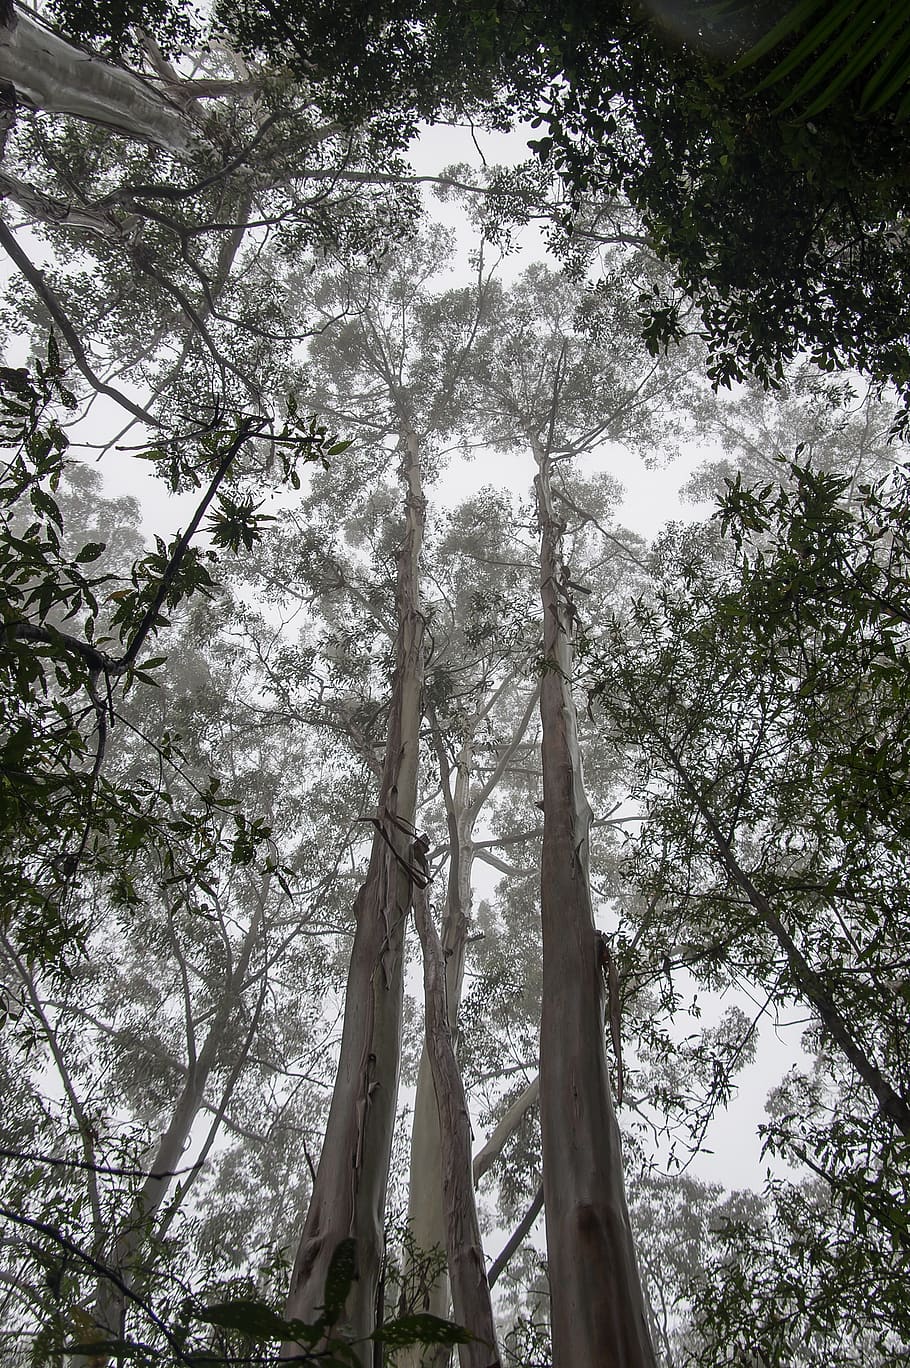 gum trees, eucalypts, wet, rain, trunks, shiny, rain forest, forest, australia, queensland